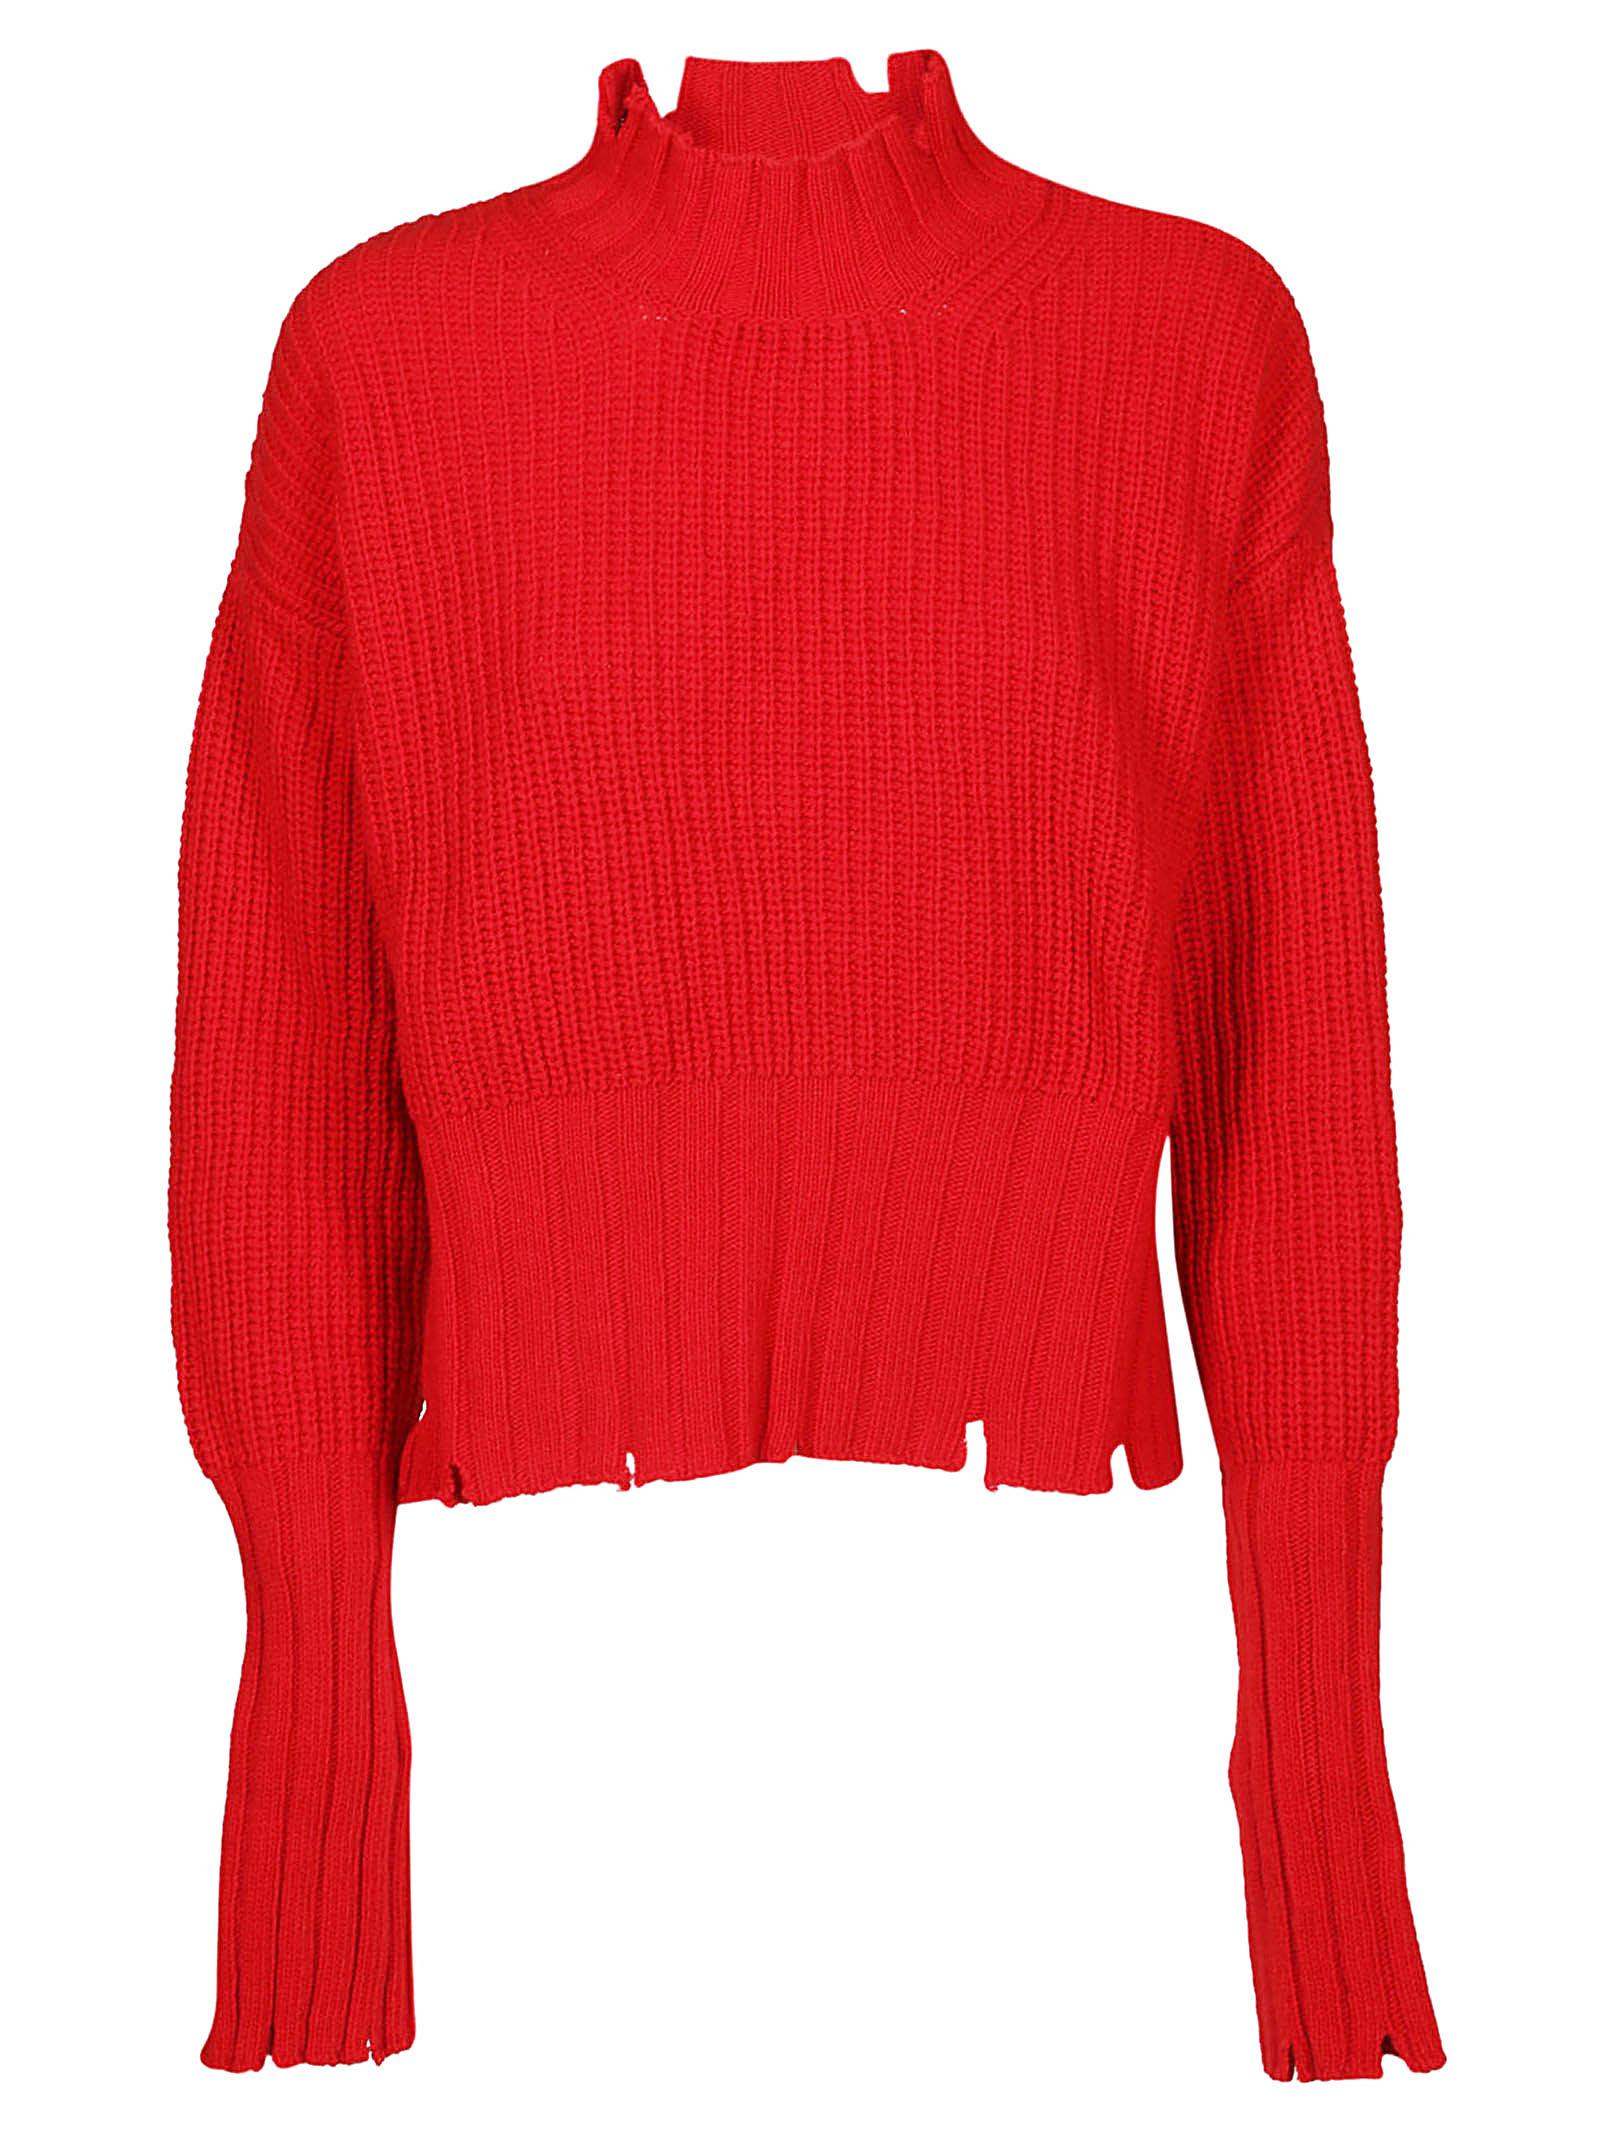 red sweater marsedit